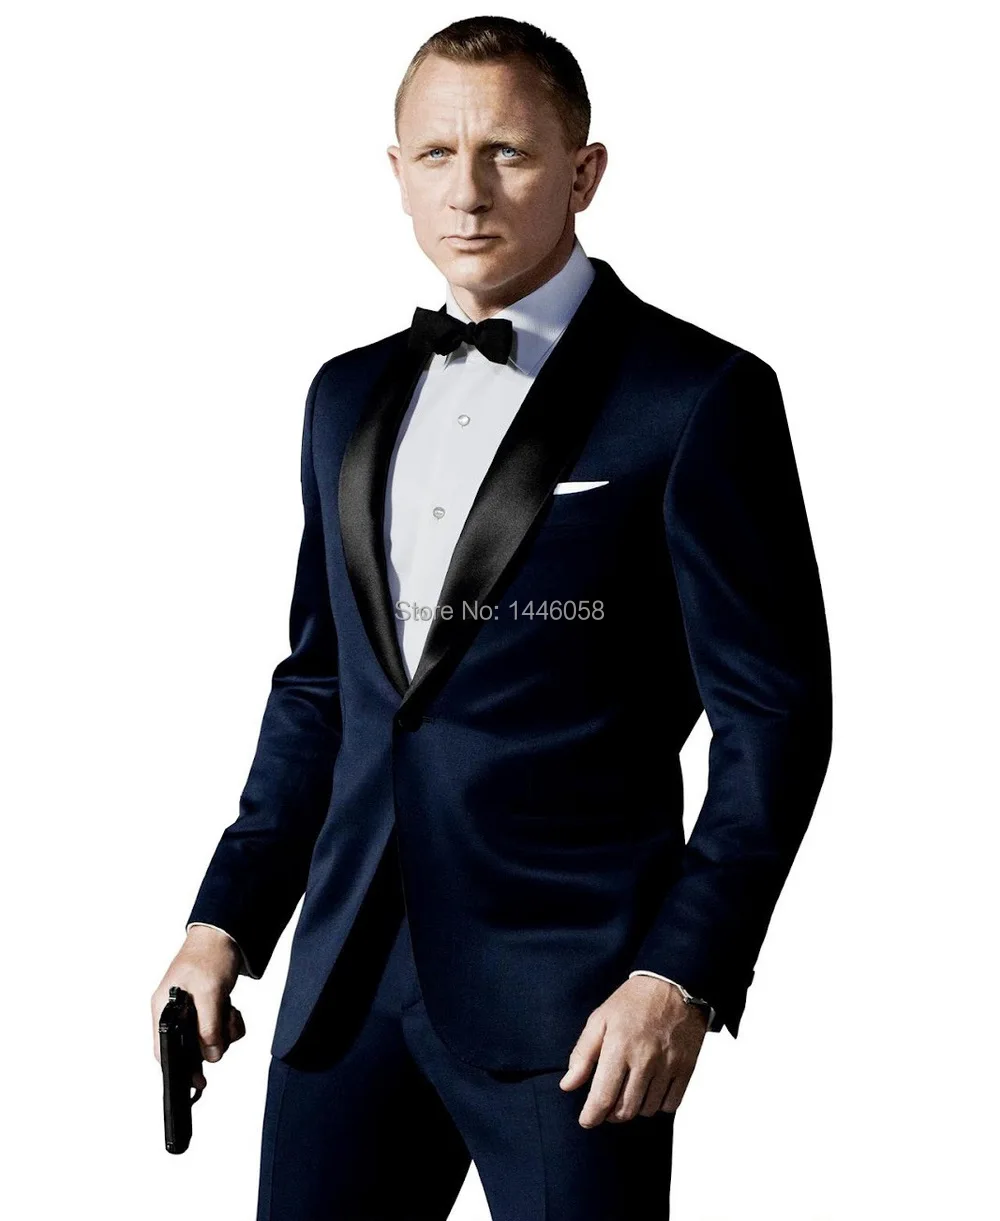 Custom Made Dark Blue Suit Inspired By Suit Worn In James Bond Wedding Suit For Men Groomsman Tuxedos Groom Wedding Suits